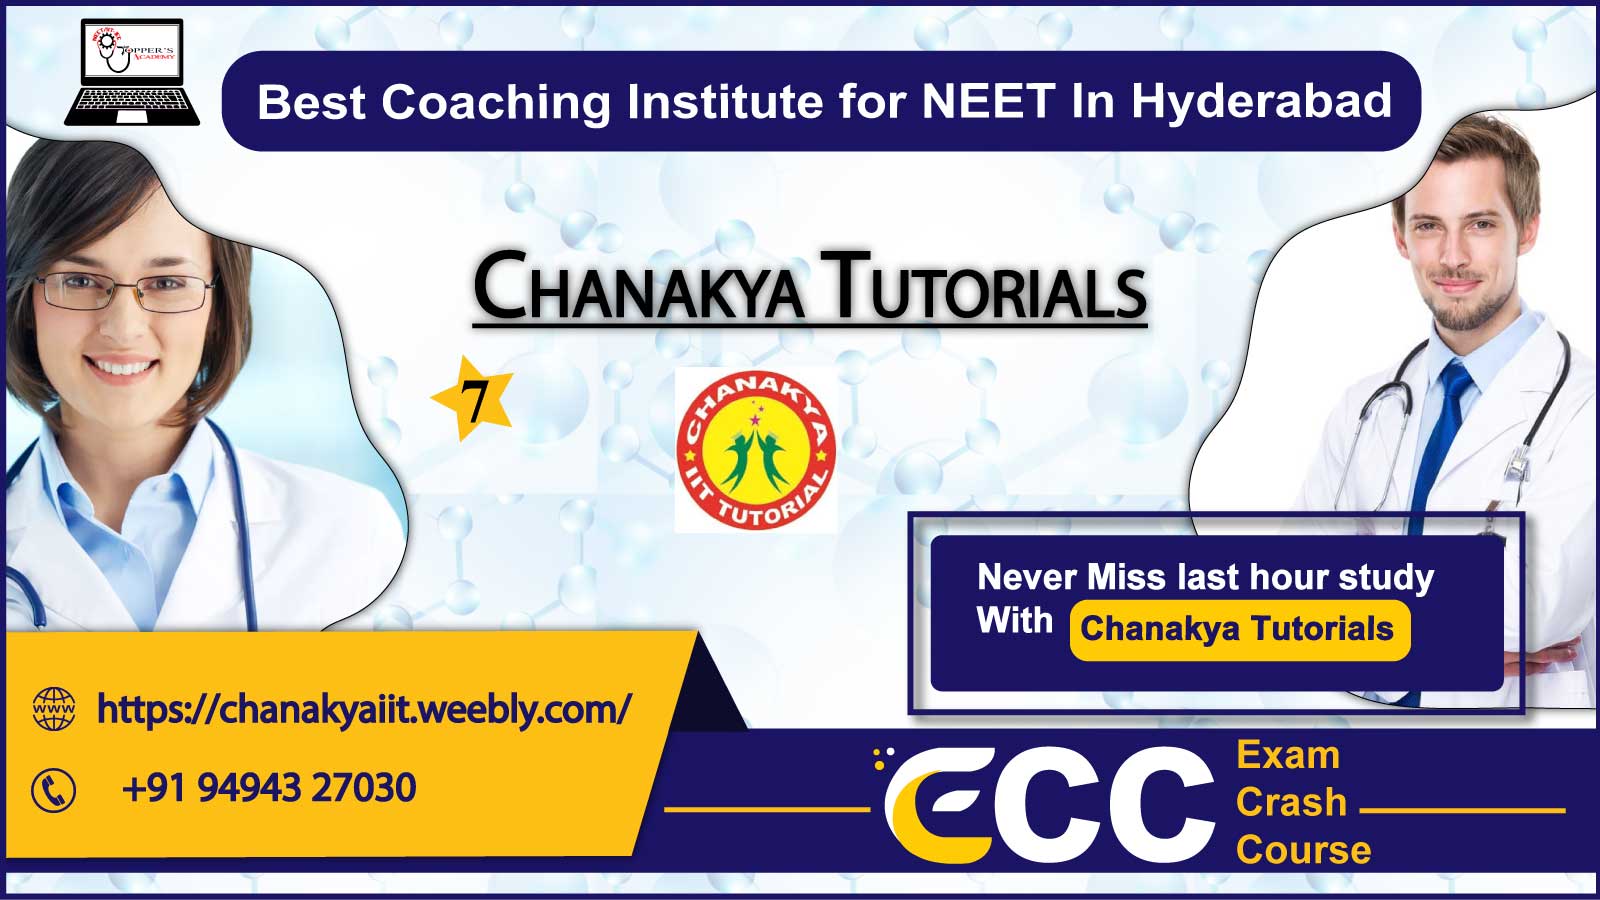 Chanakya Tutorials NEET Coaching In Hyderabad